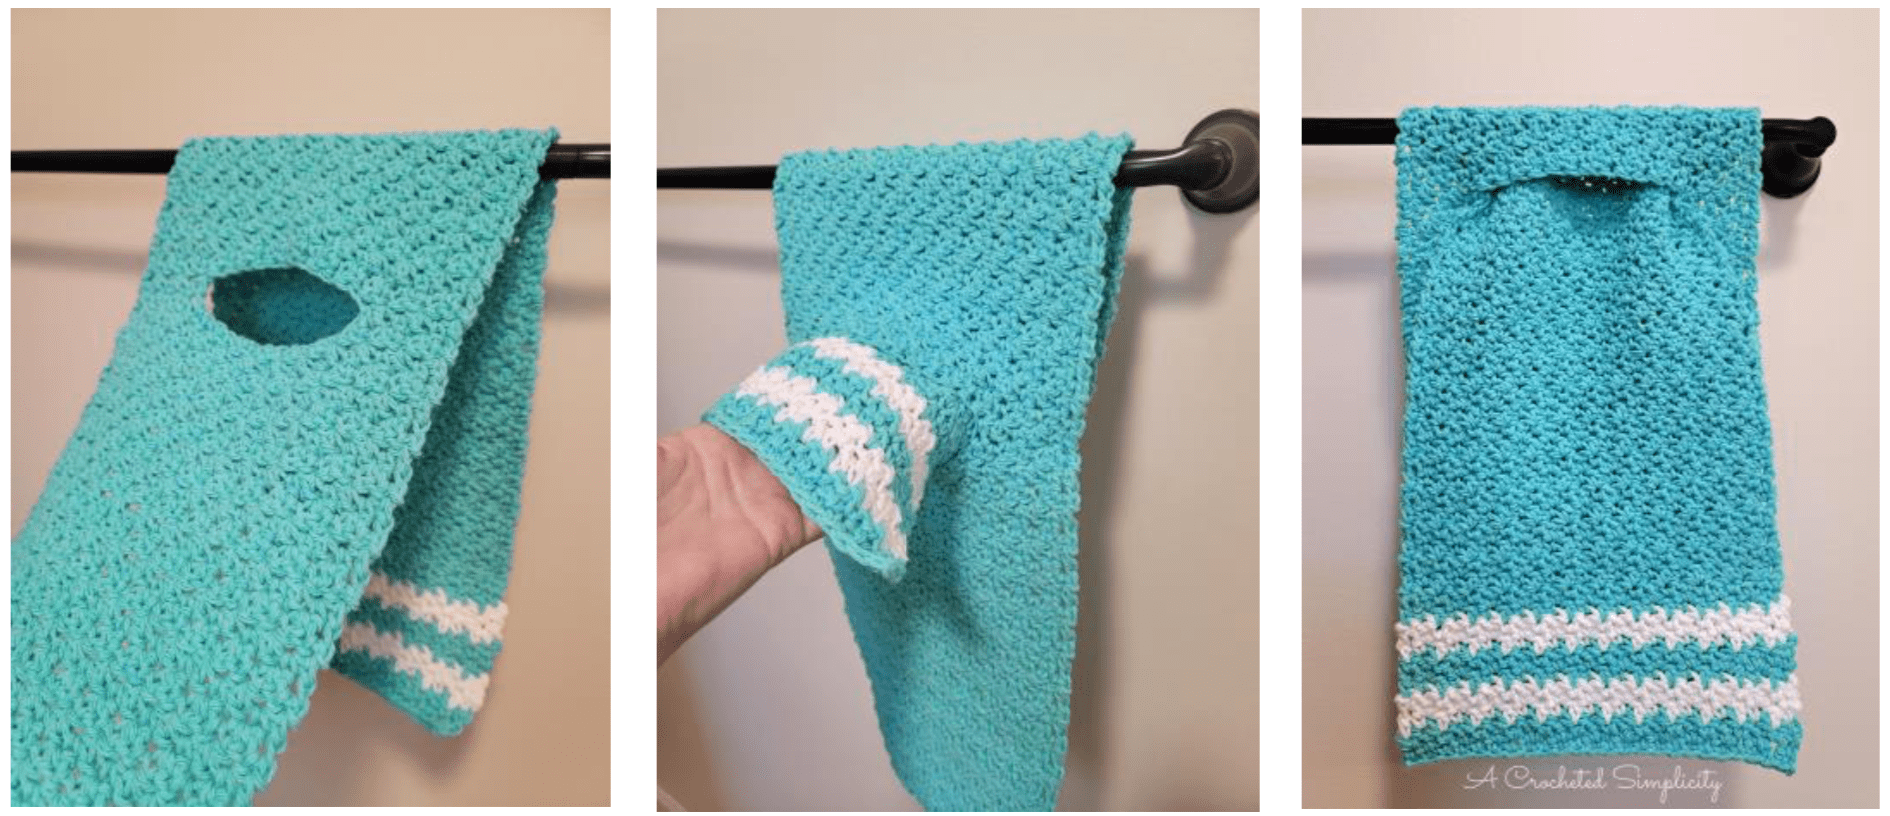 _Single Kitchen Towels Blanks 100% Cotton - Smart Needle